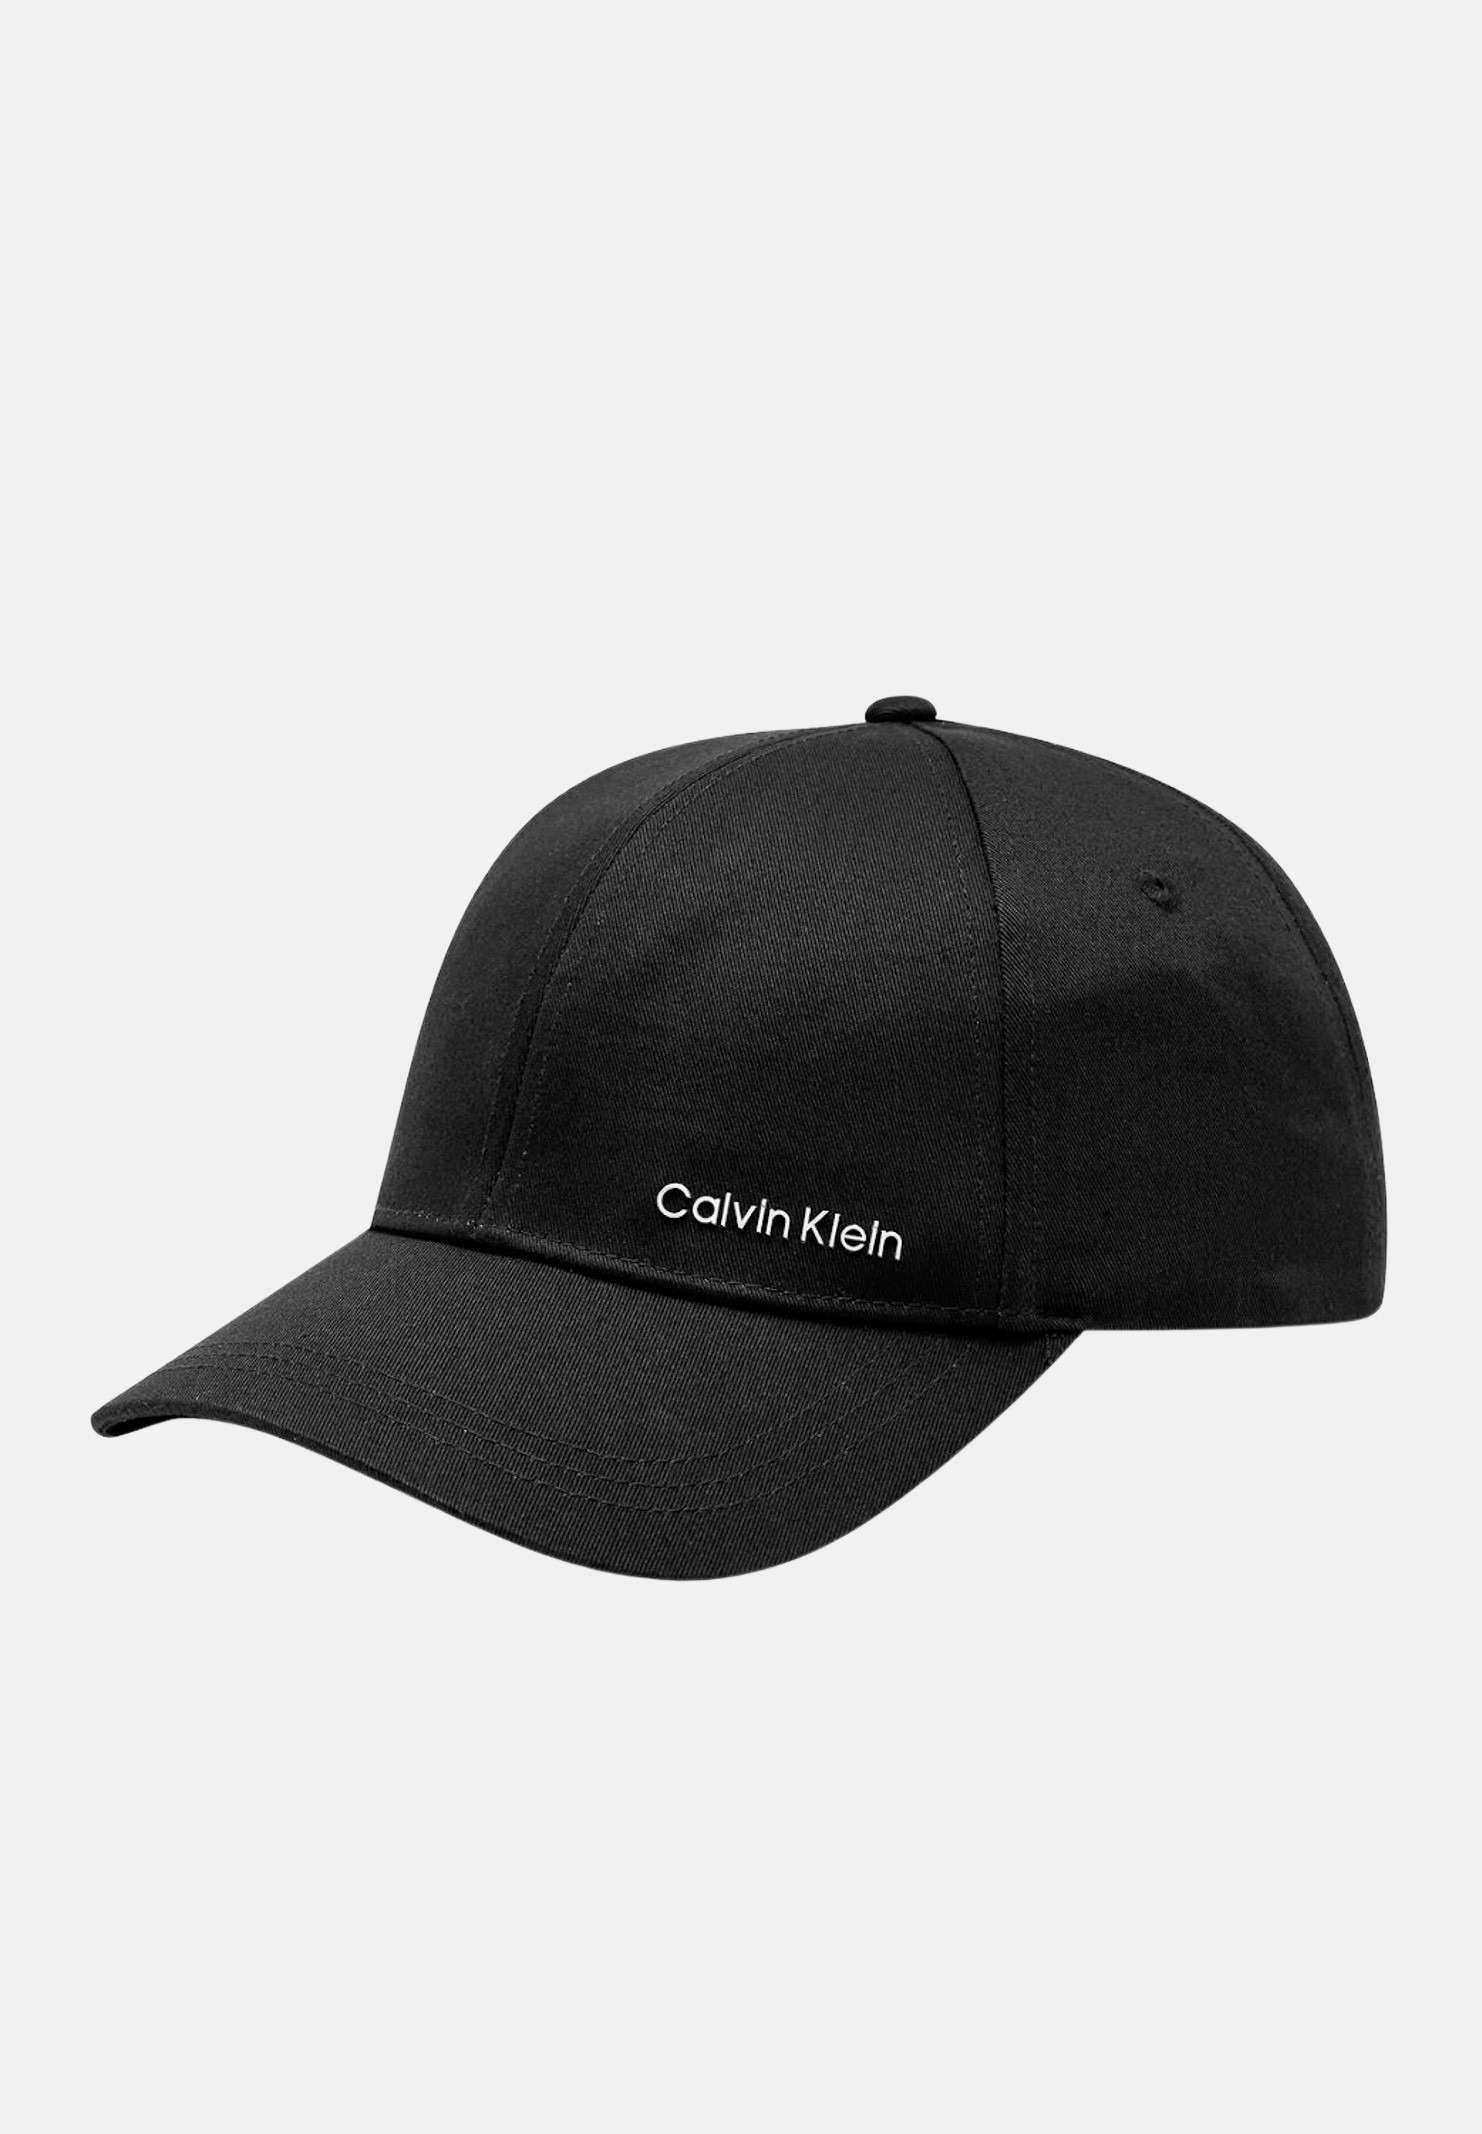 Black men's and women's cap with contrasting white logo - CALVIN KLEIN -  Pavidas